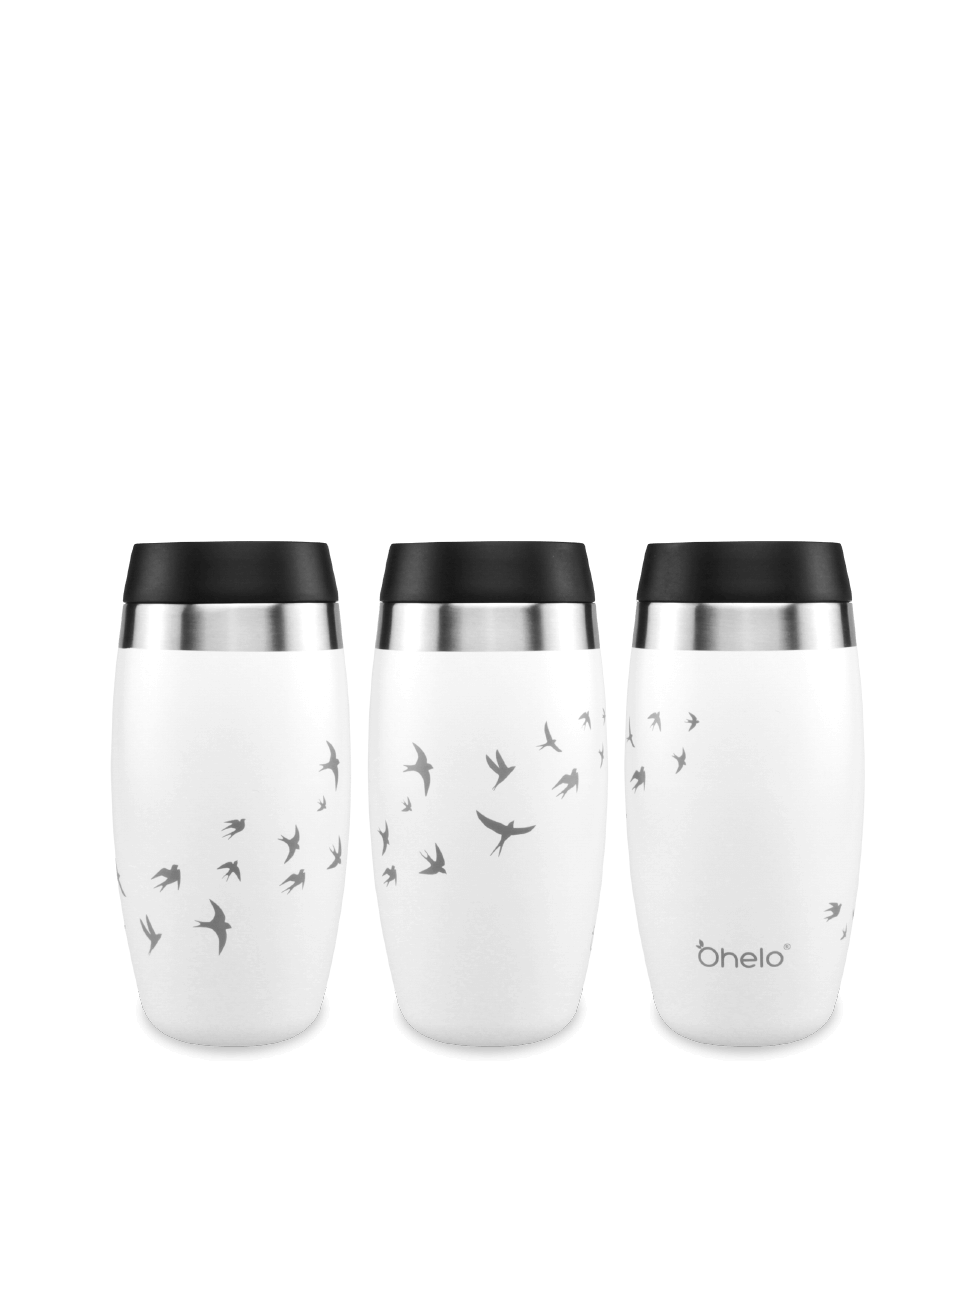 Ohelo dishwasher safe travel mug in white with bird design - image showing design from 3 sides